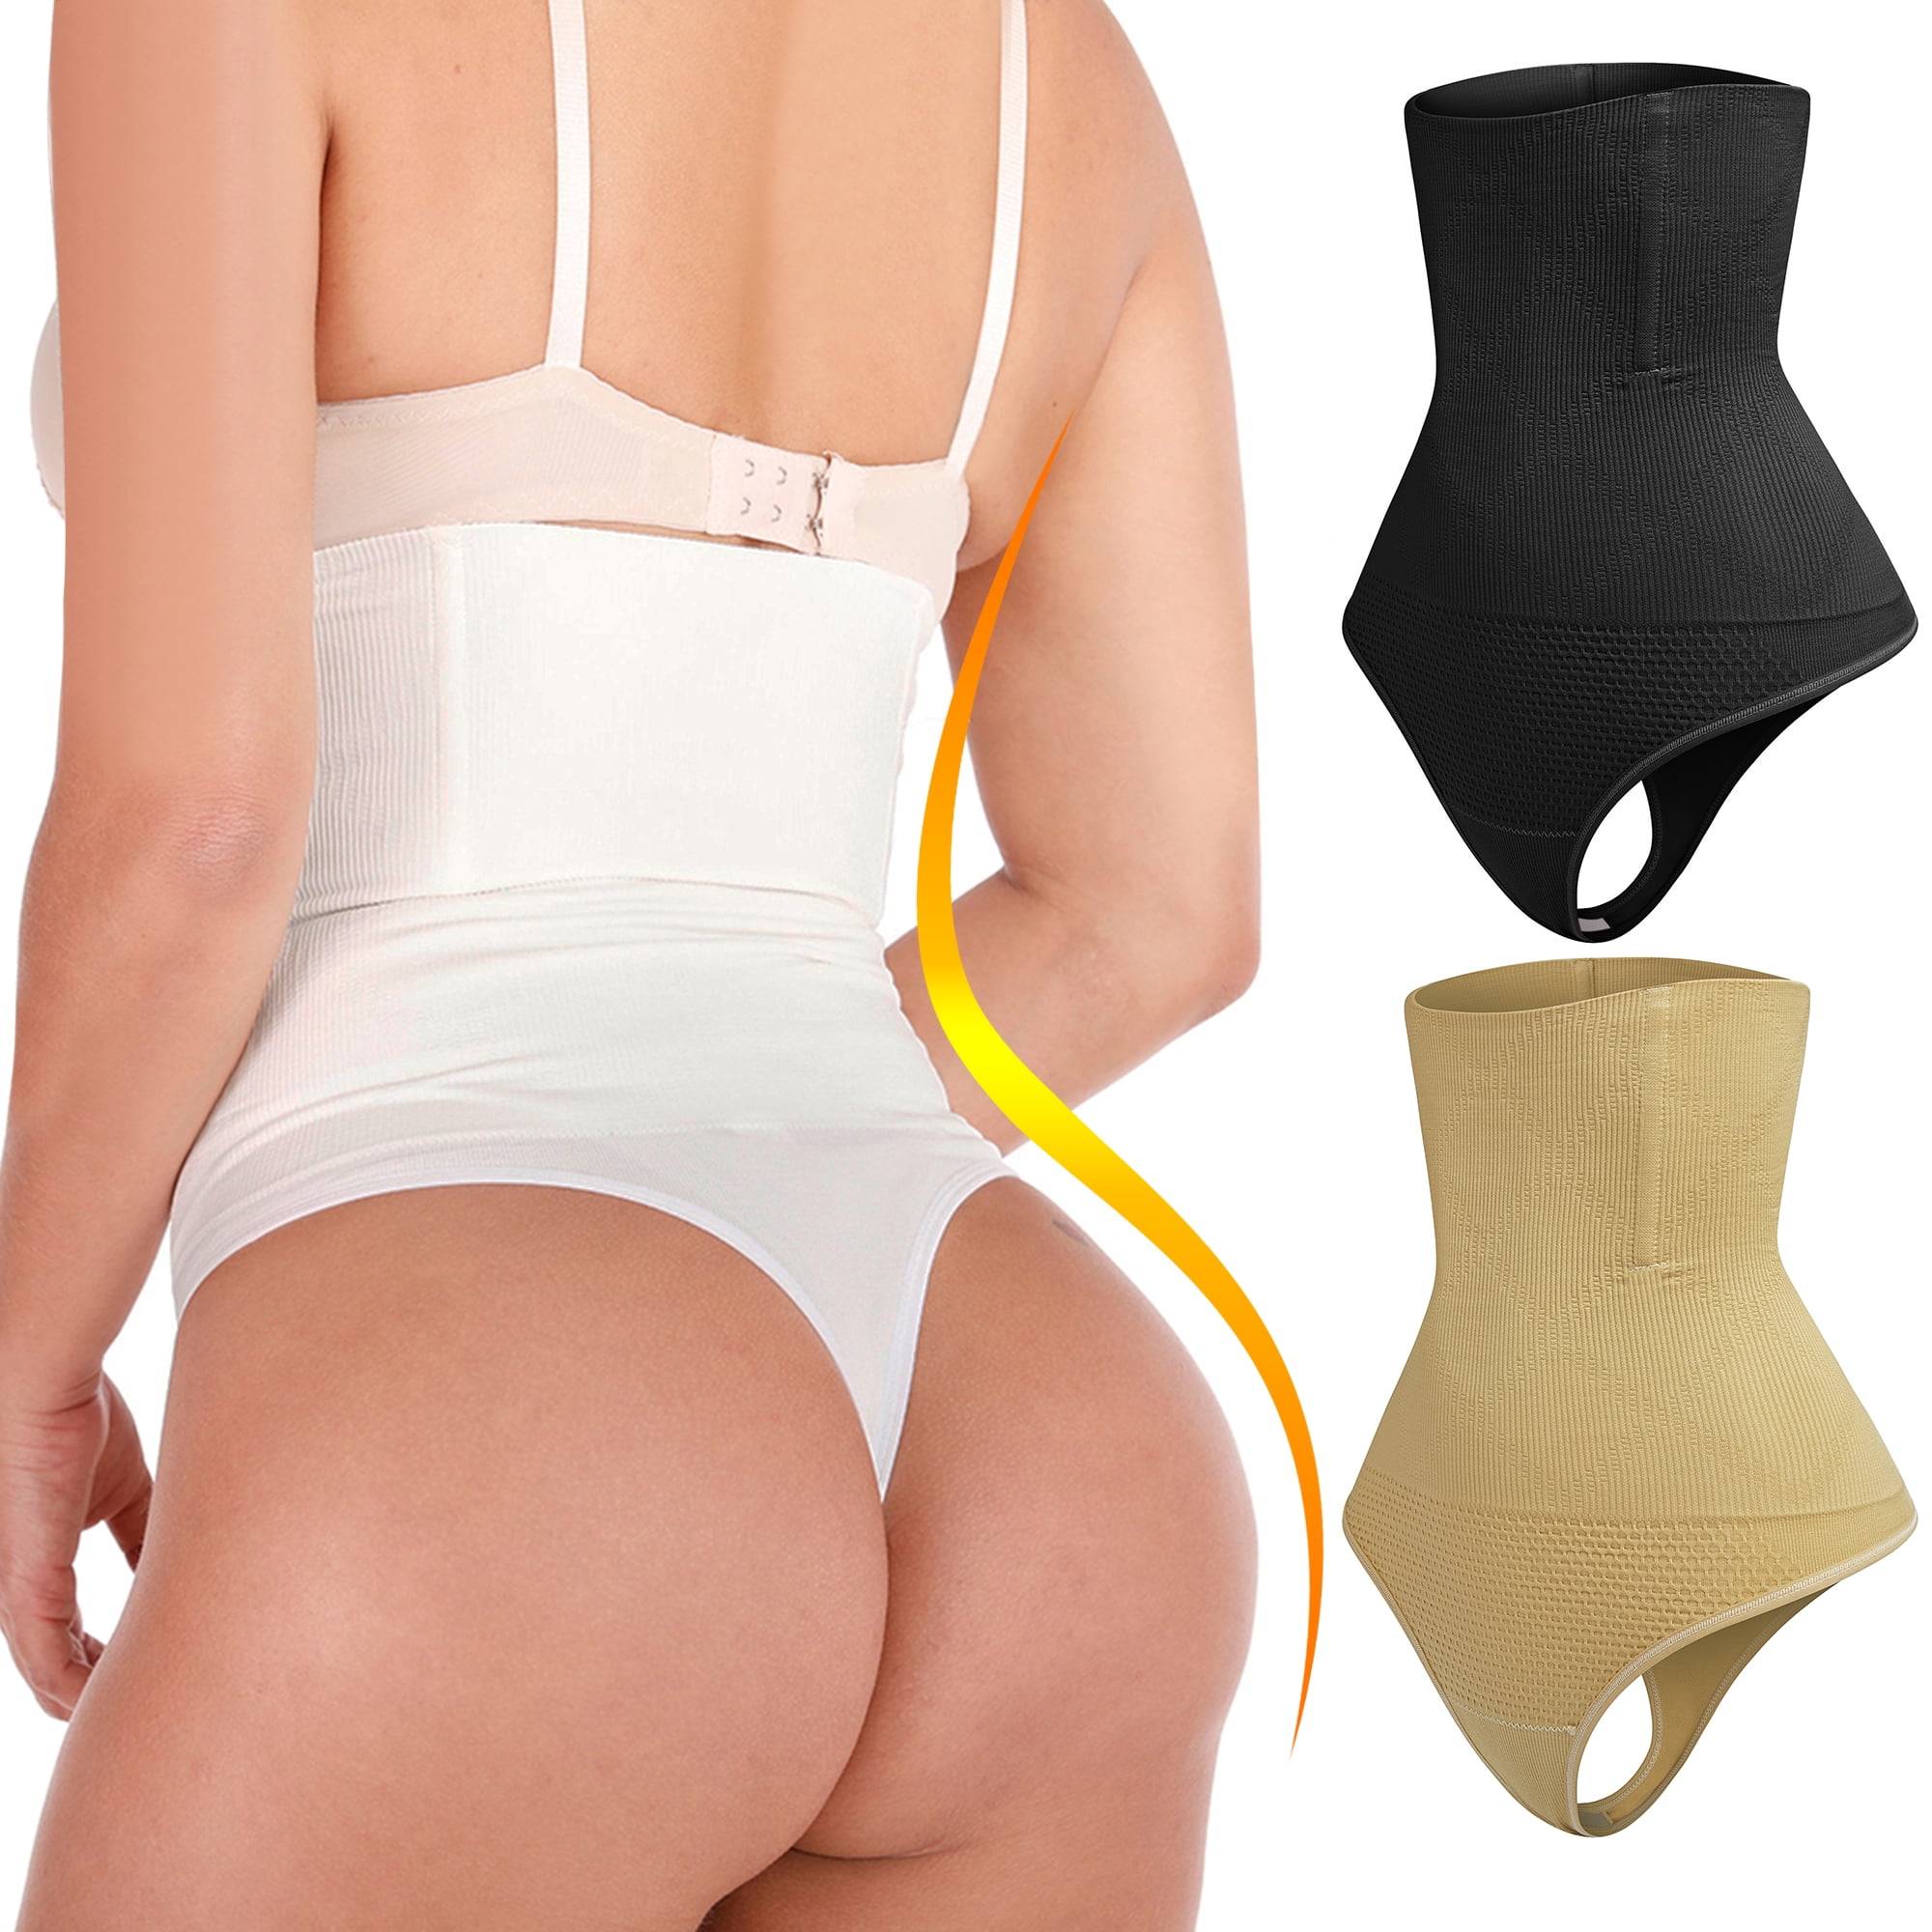 3pieces/Lot High Waist Women Seamless Control Panties Slimming Body Shaper  Underwear Girdle Shapewear Ladies Briefs